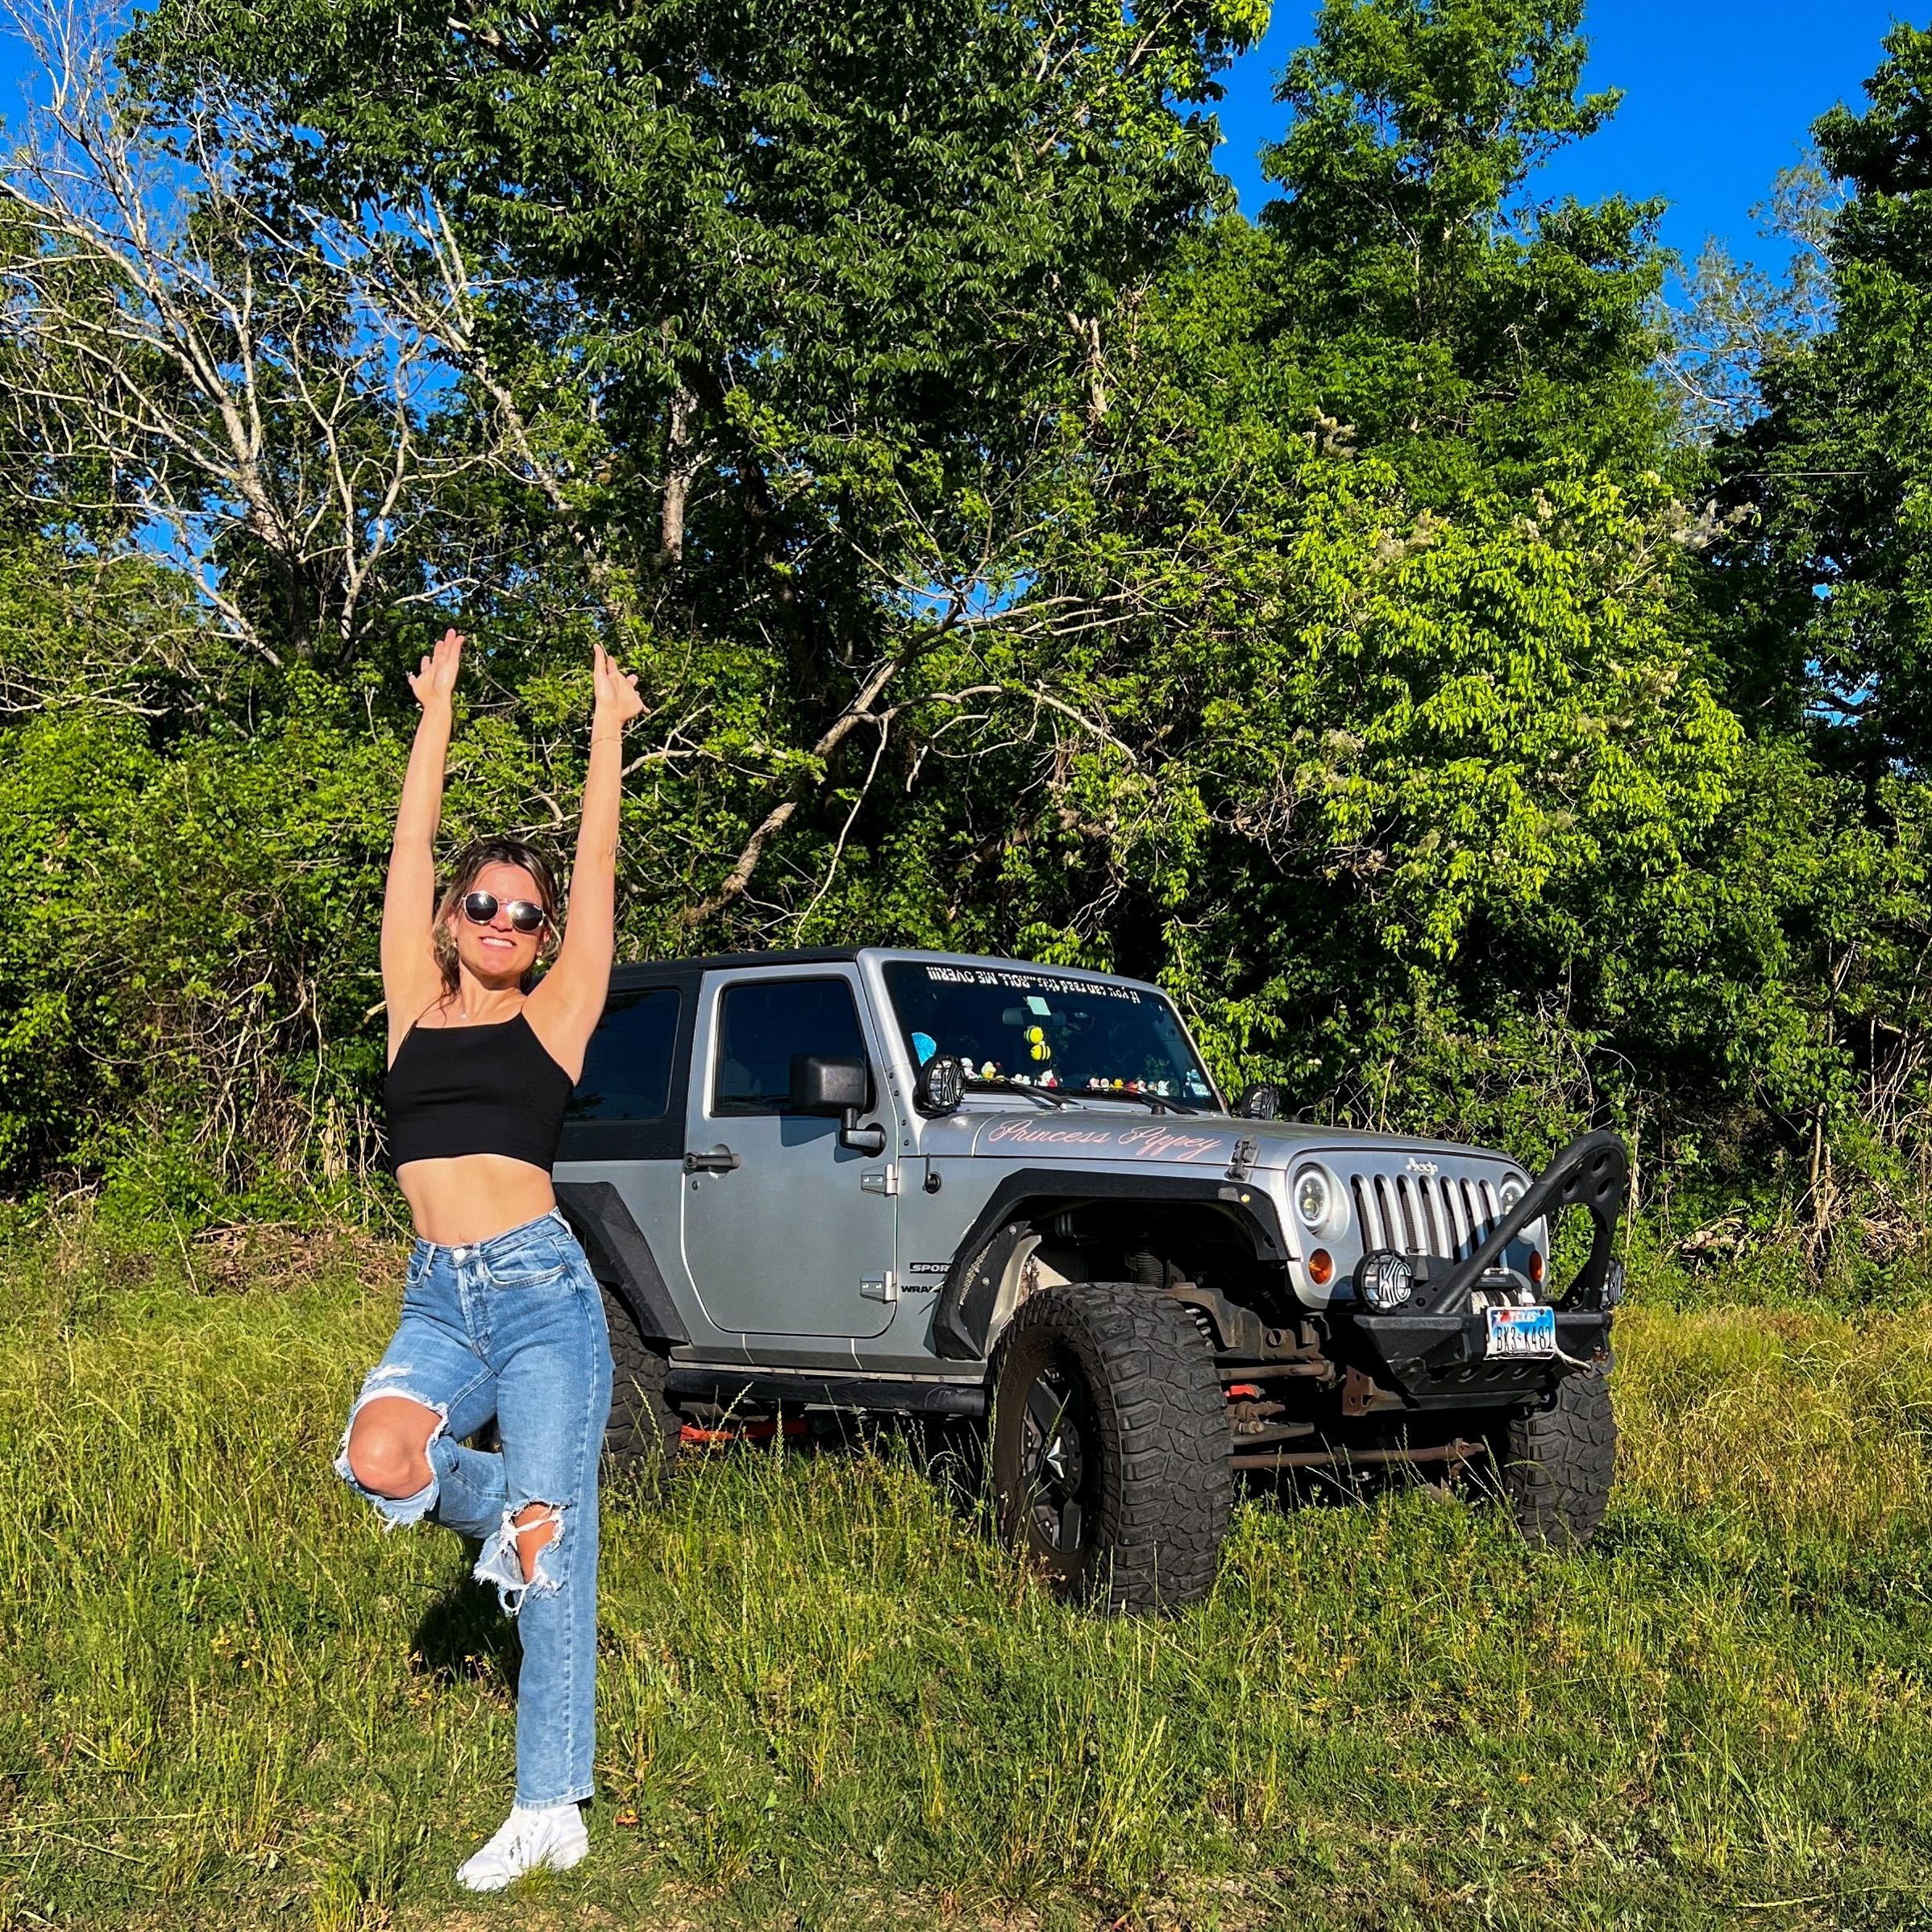 Happy Monday, yall! ☀️ 

#Jeepgirl #jeeplife #jeepjk #wrangler #jeepwrangler #mallcrawler #jeepgirlsdoitbetter #adventure #houstonjeeps #jeepgirlslikeitdirty #2doorjeep #jeepbabe #jeep #jeepgirlgang #jeepgirlsrock